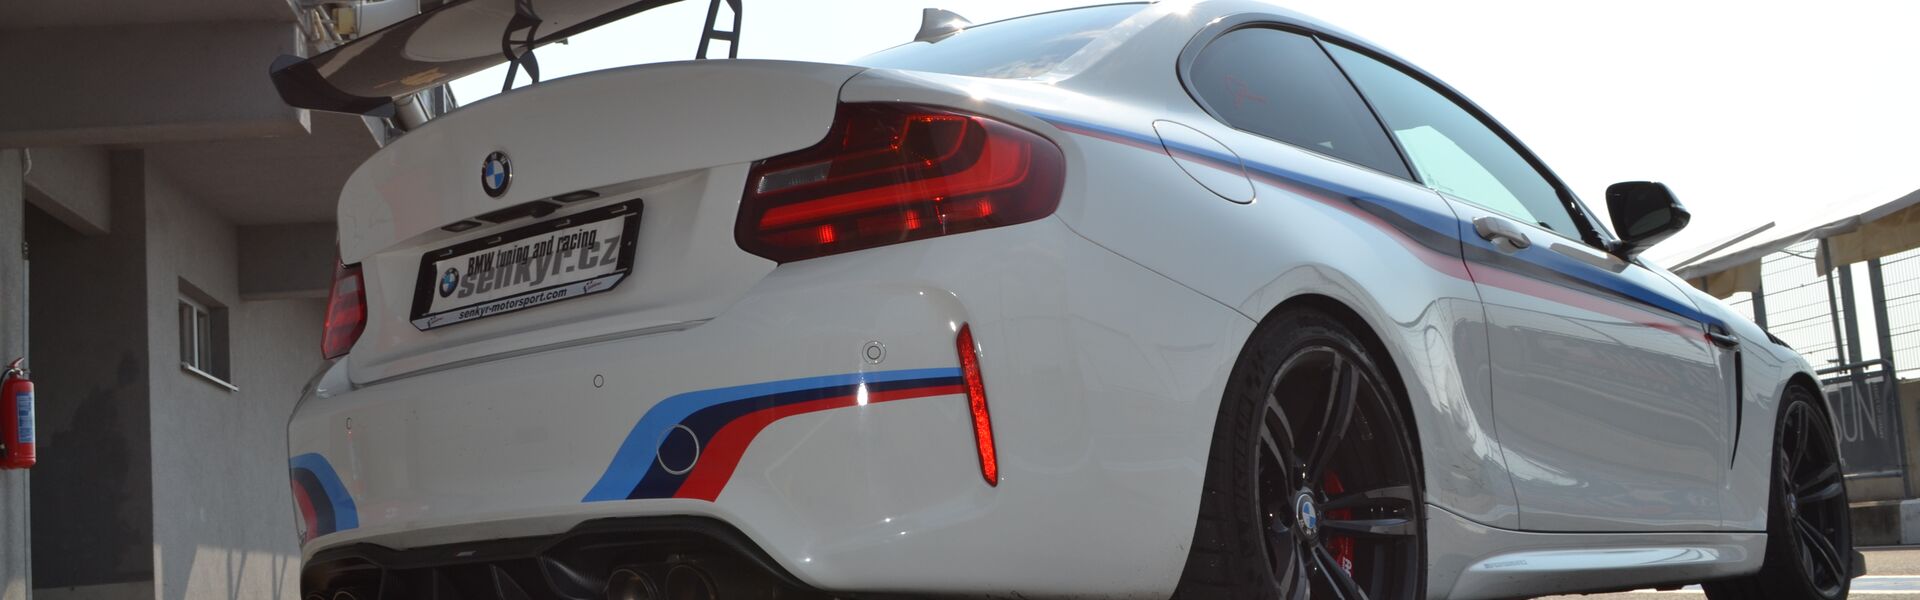 Bodykit/ Aerodynamické prvky pro automobil BMW M6 E63, E64